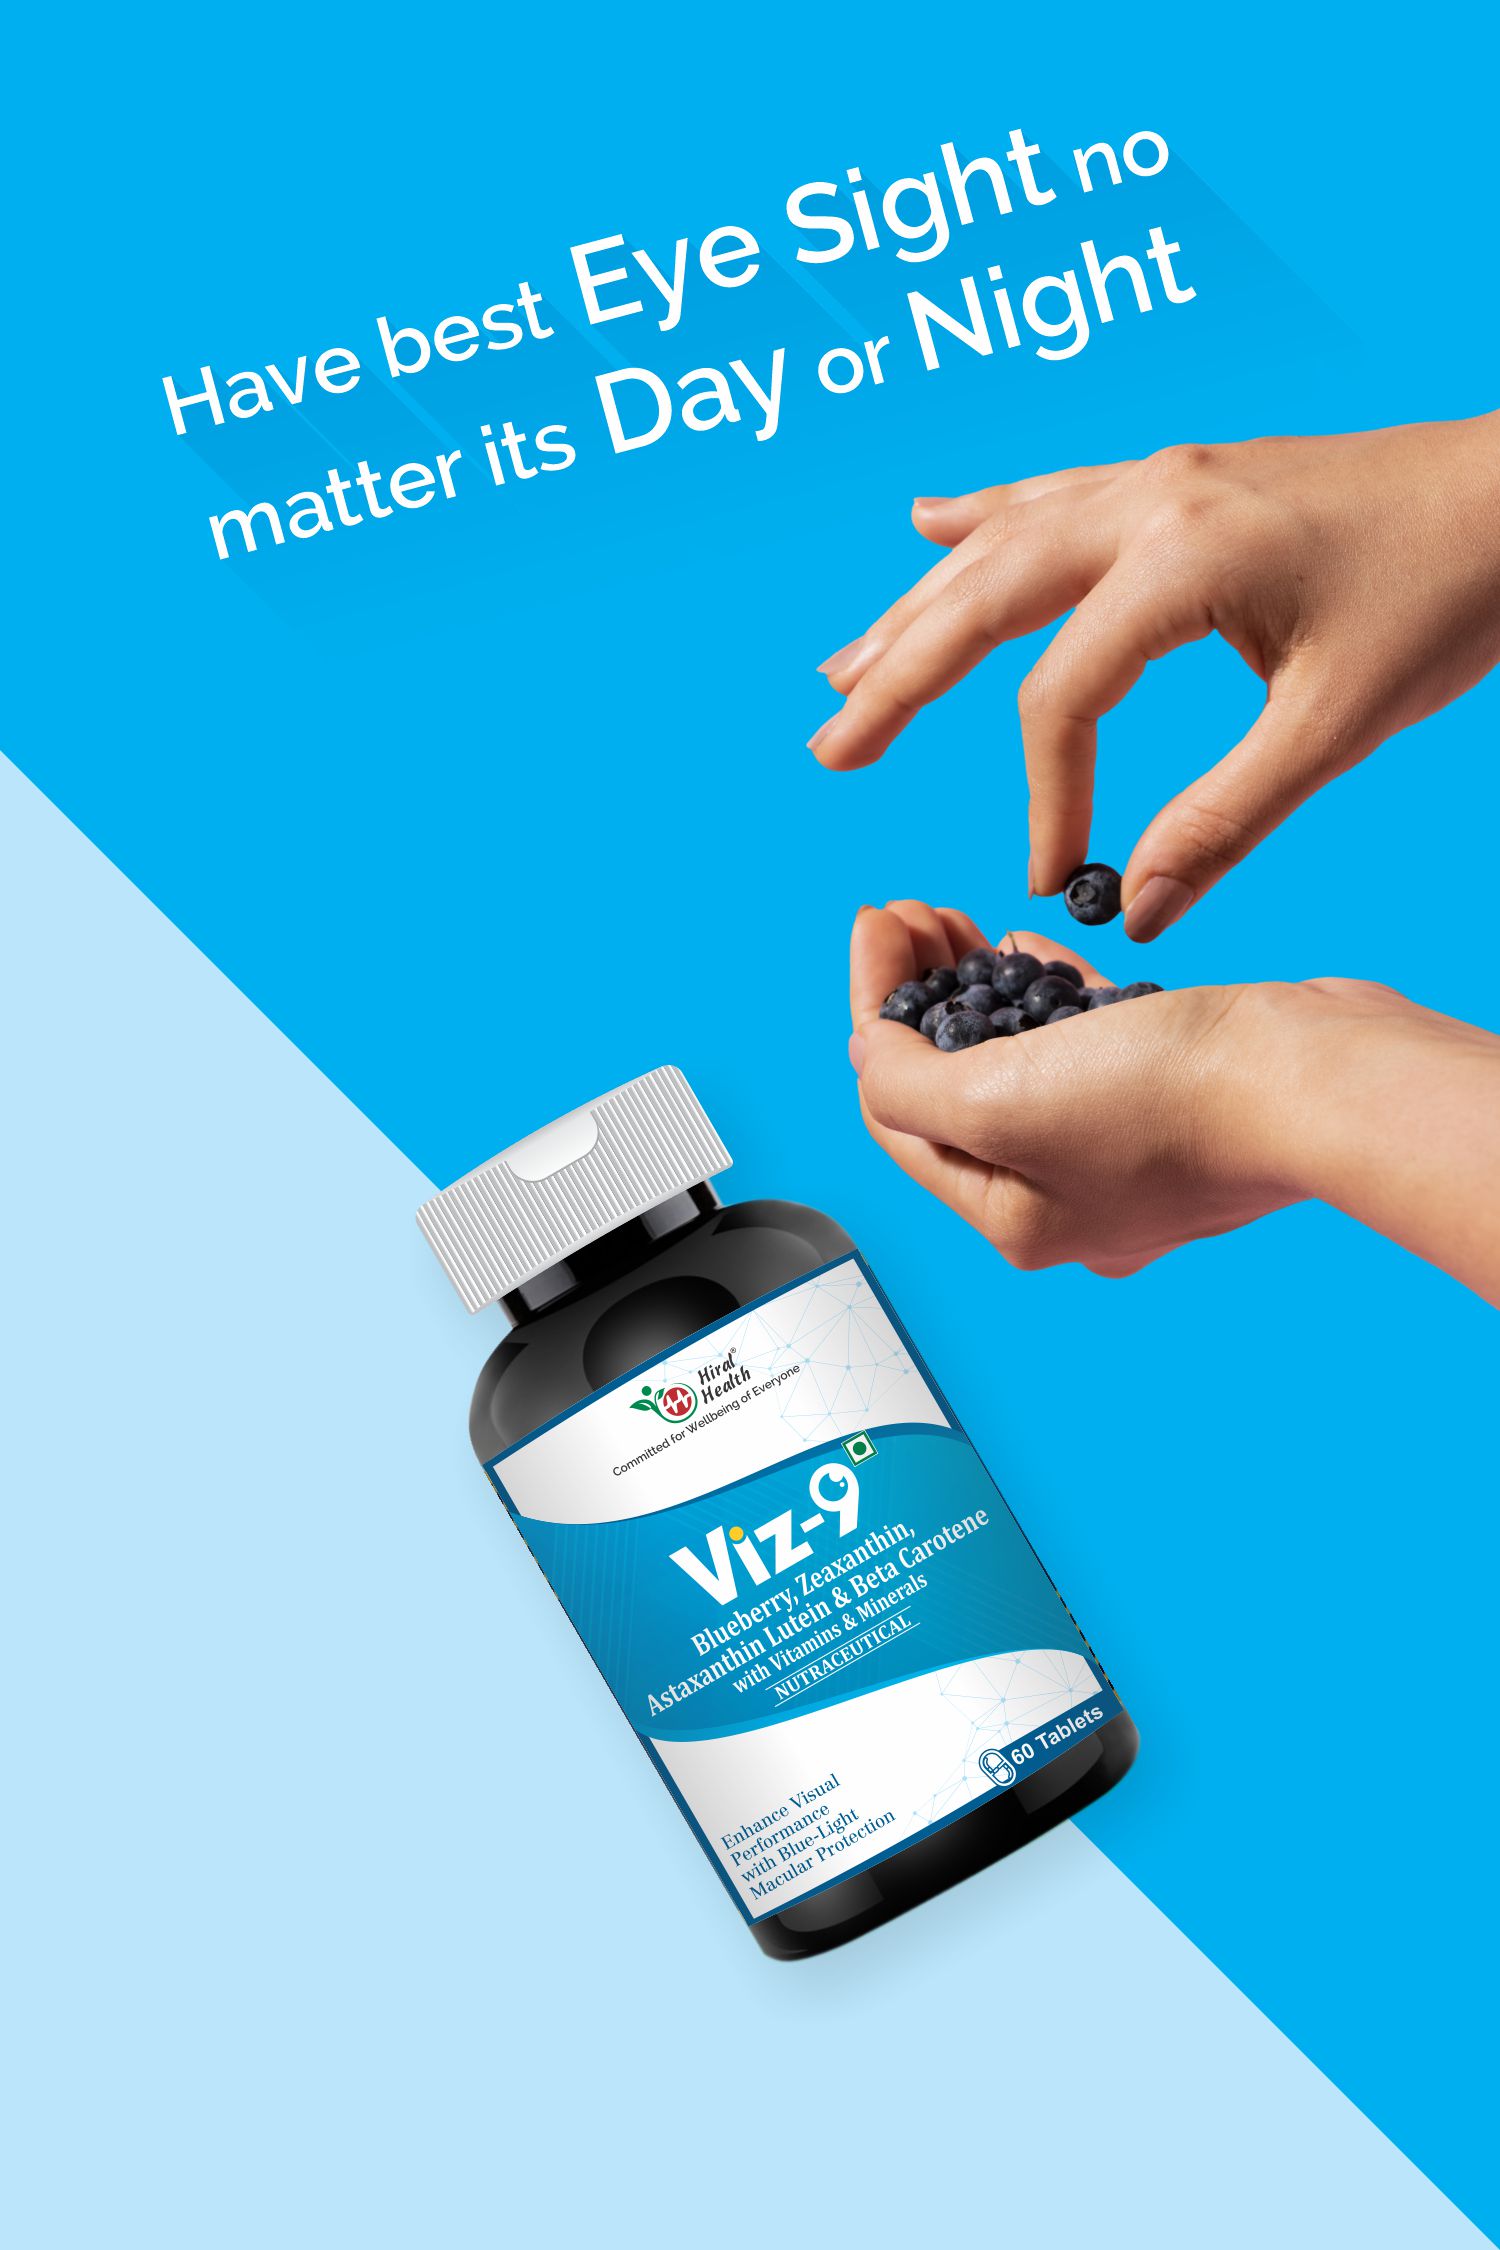 viz-9 tablets also enhance your vision.